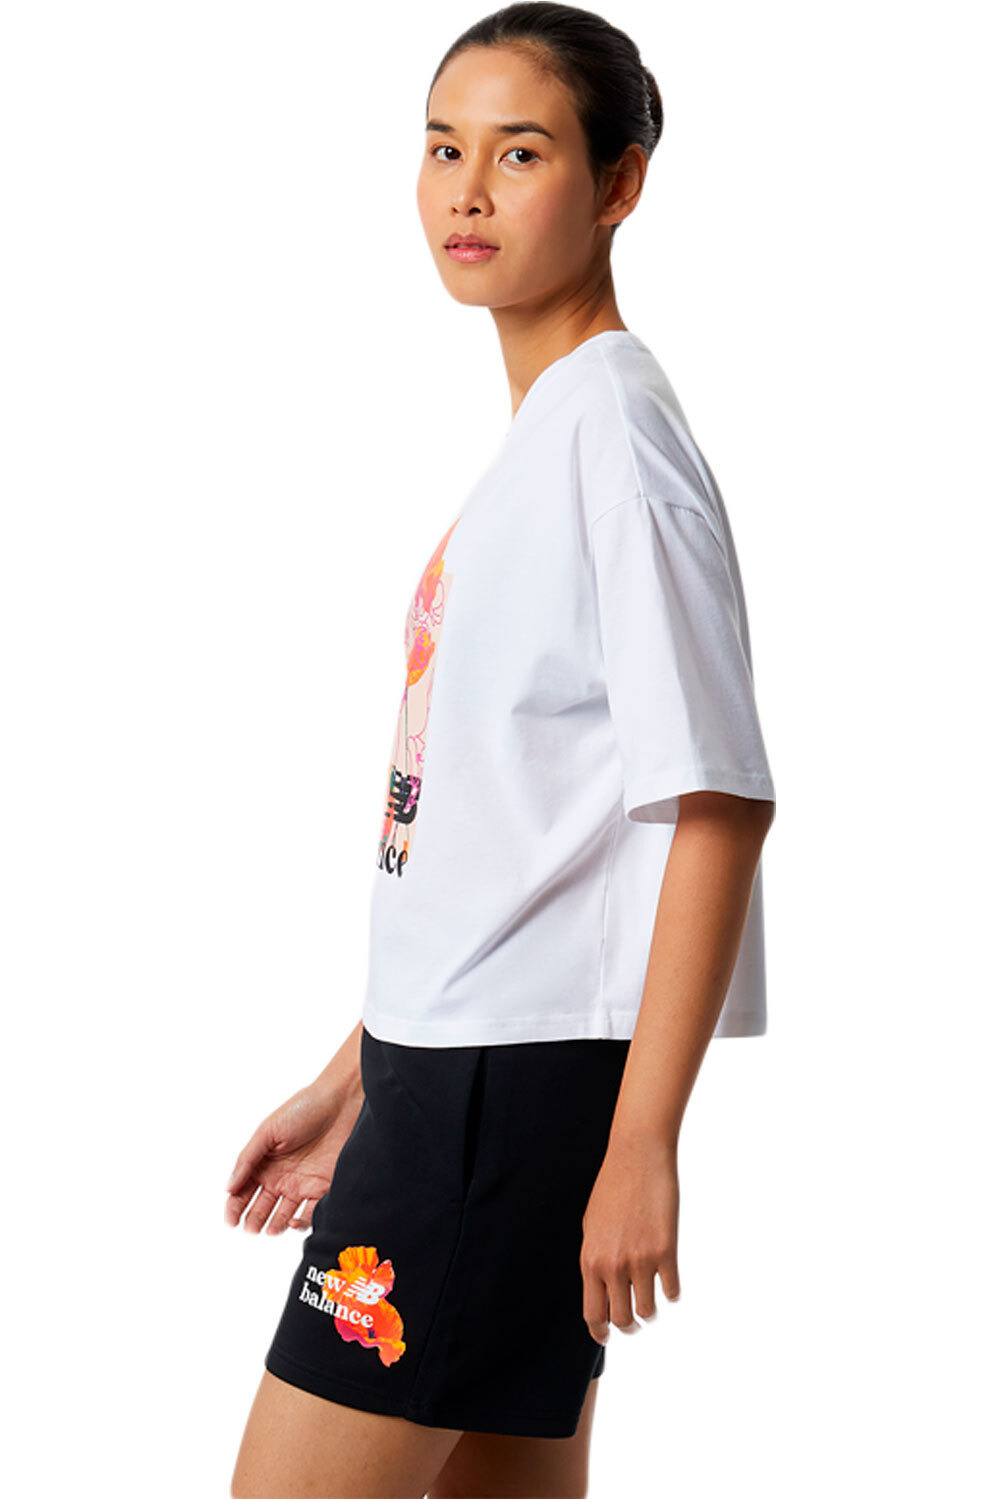 New Balance camiseta manga corta mujer WT21560 vista frontal